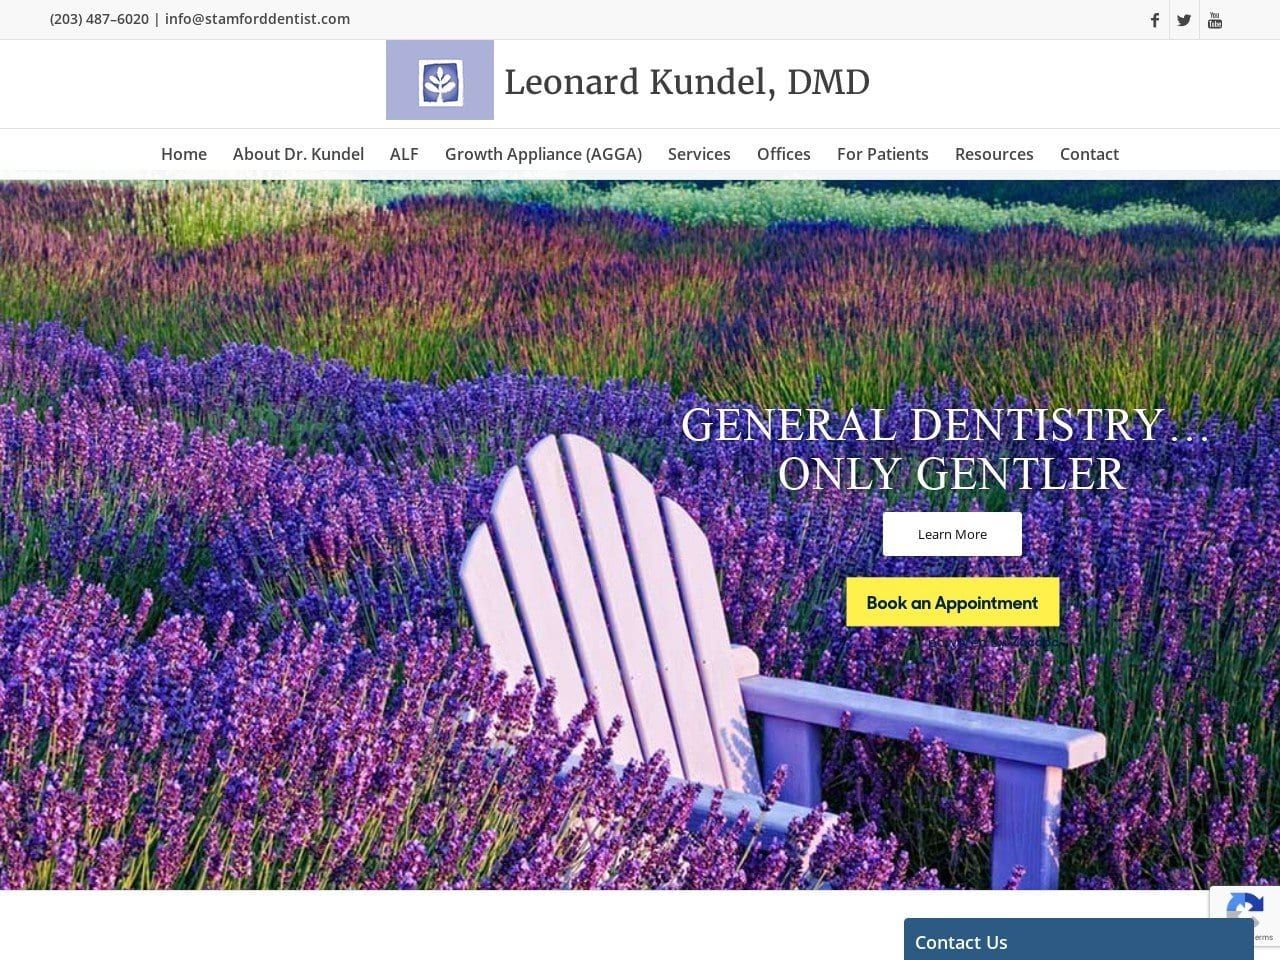 Dr. Leonard Kundel DMD Website Screenshot from stamforddentist.com